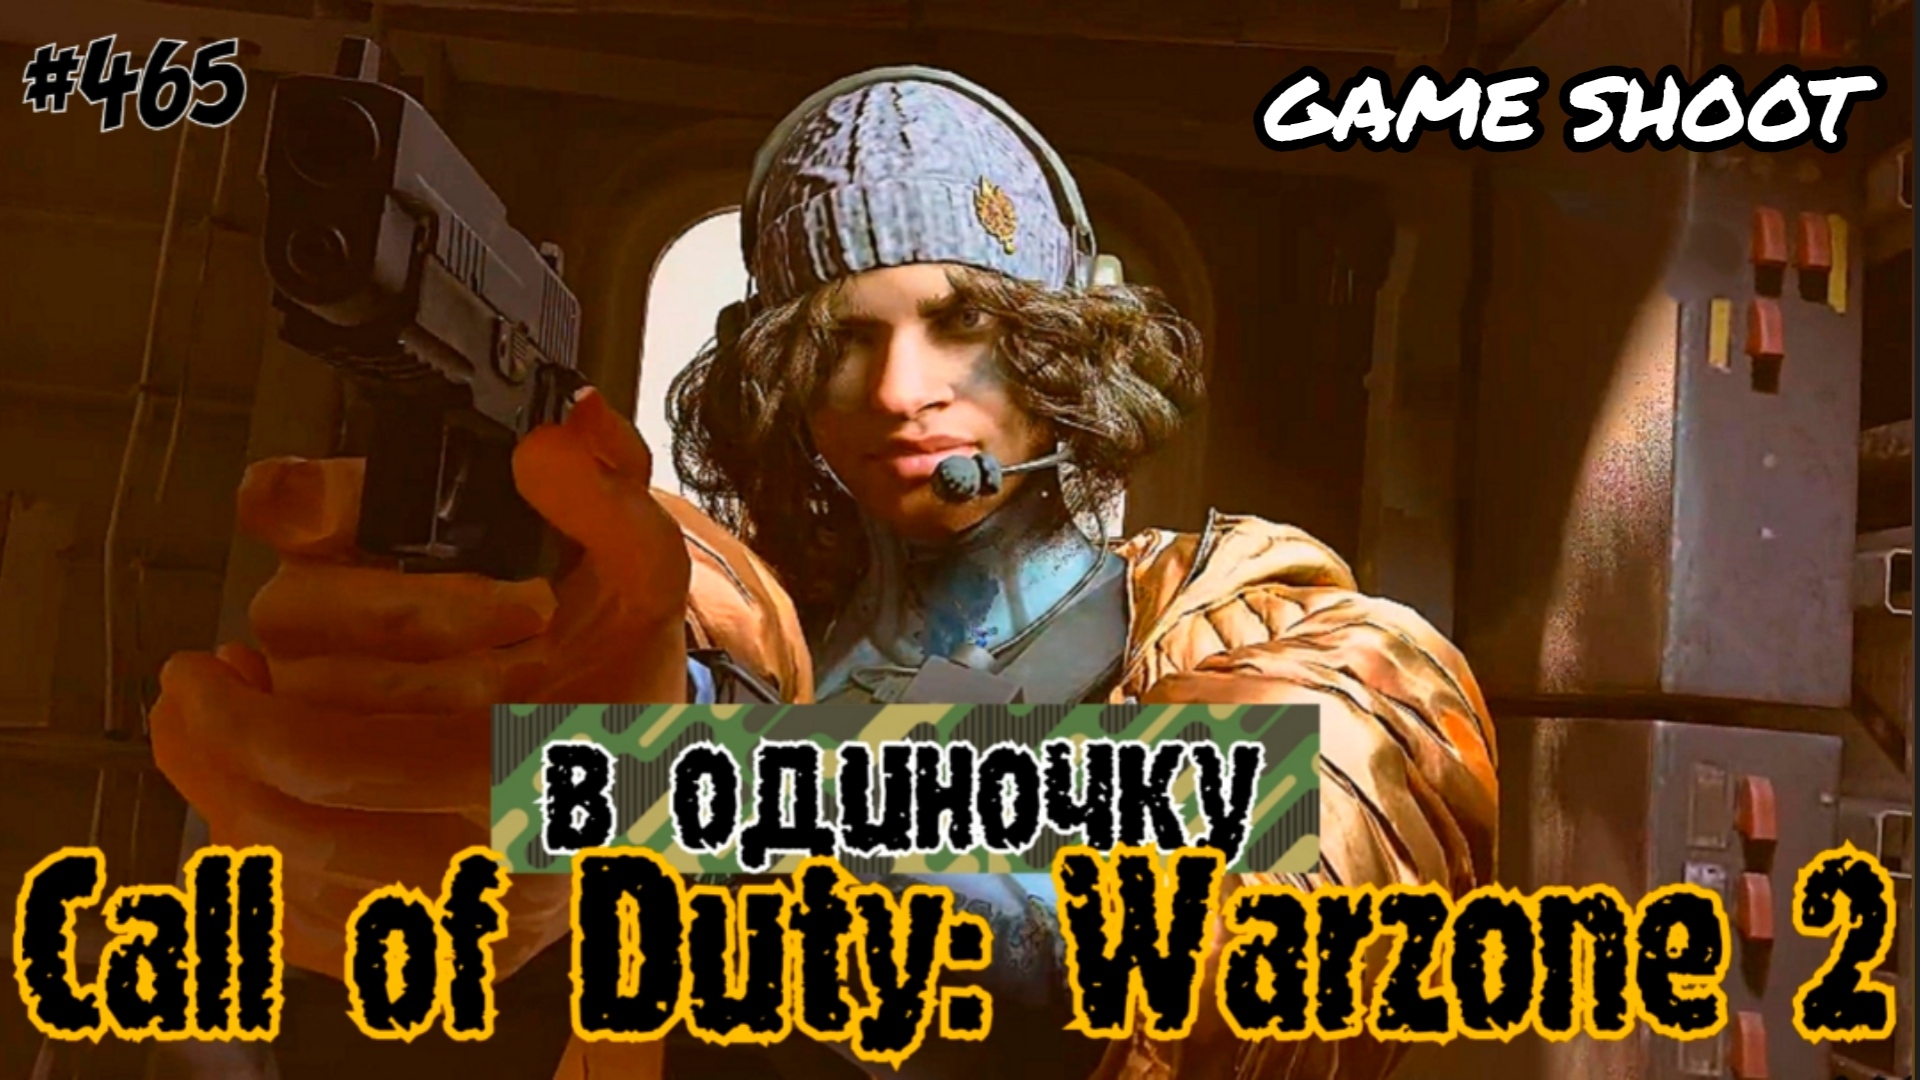 Call of Duty: Warzone 2 [в одиночку] #465 Game Shoot